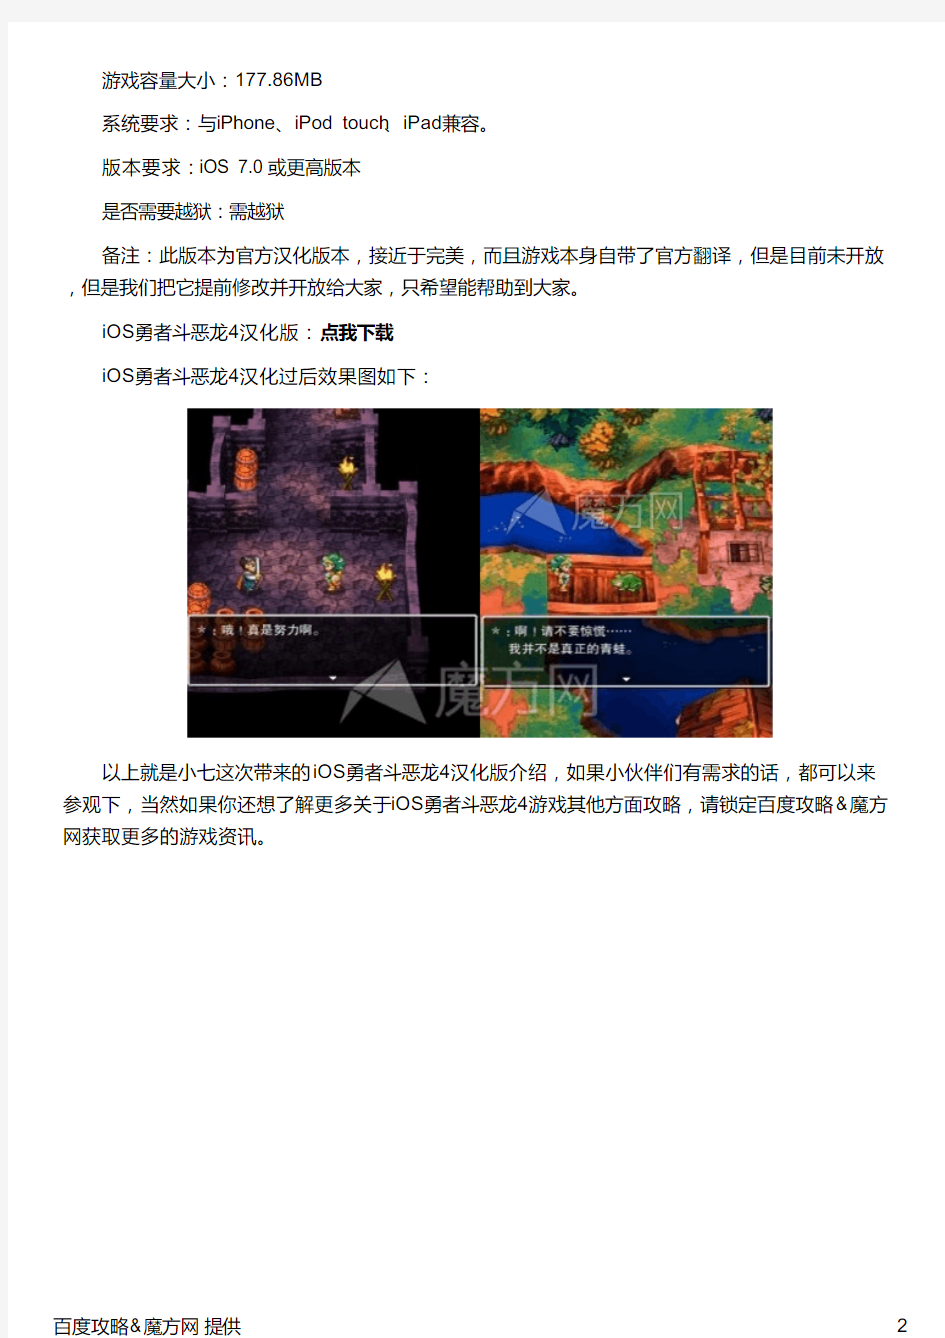 iOS勇者斗恶龙4汉化版发布